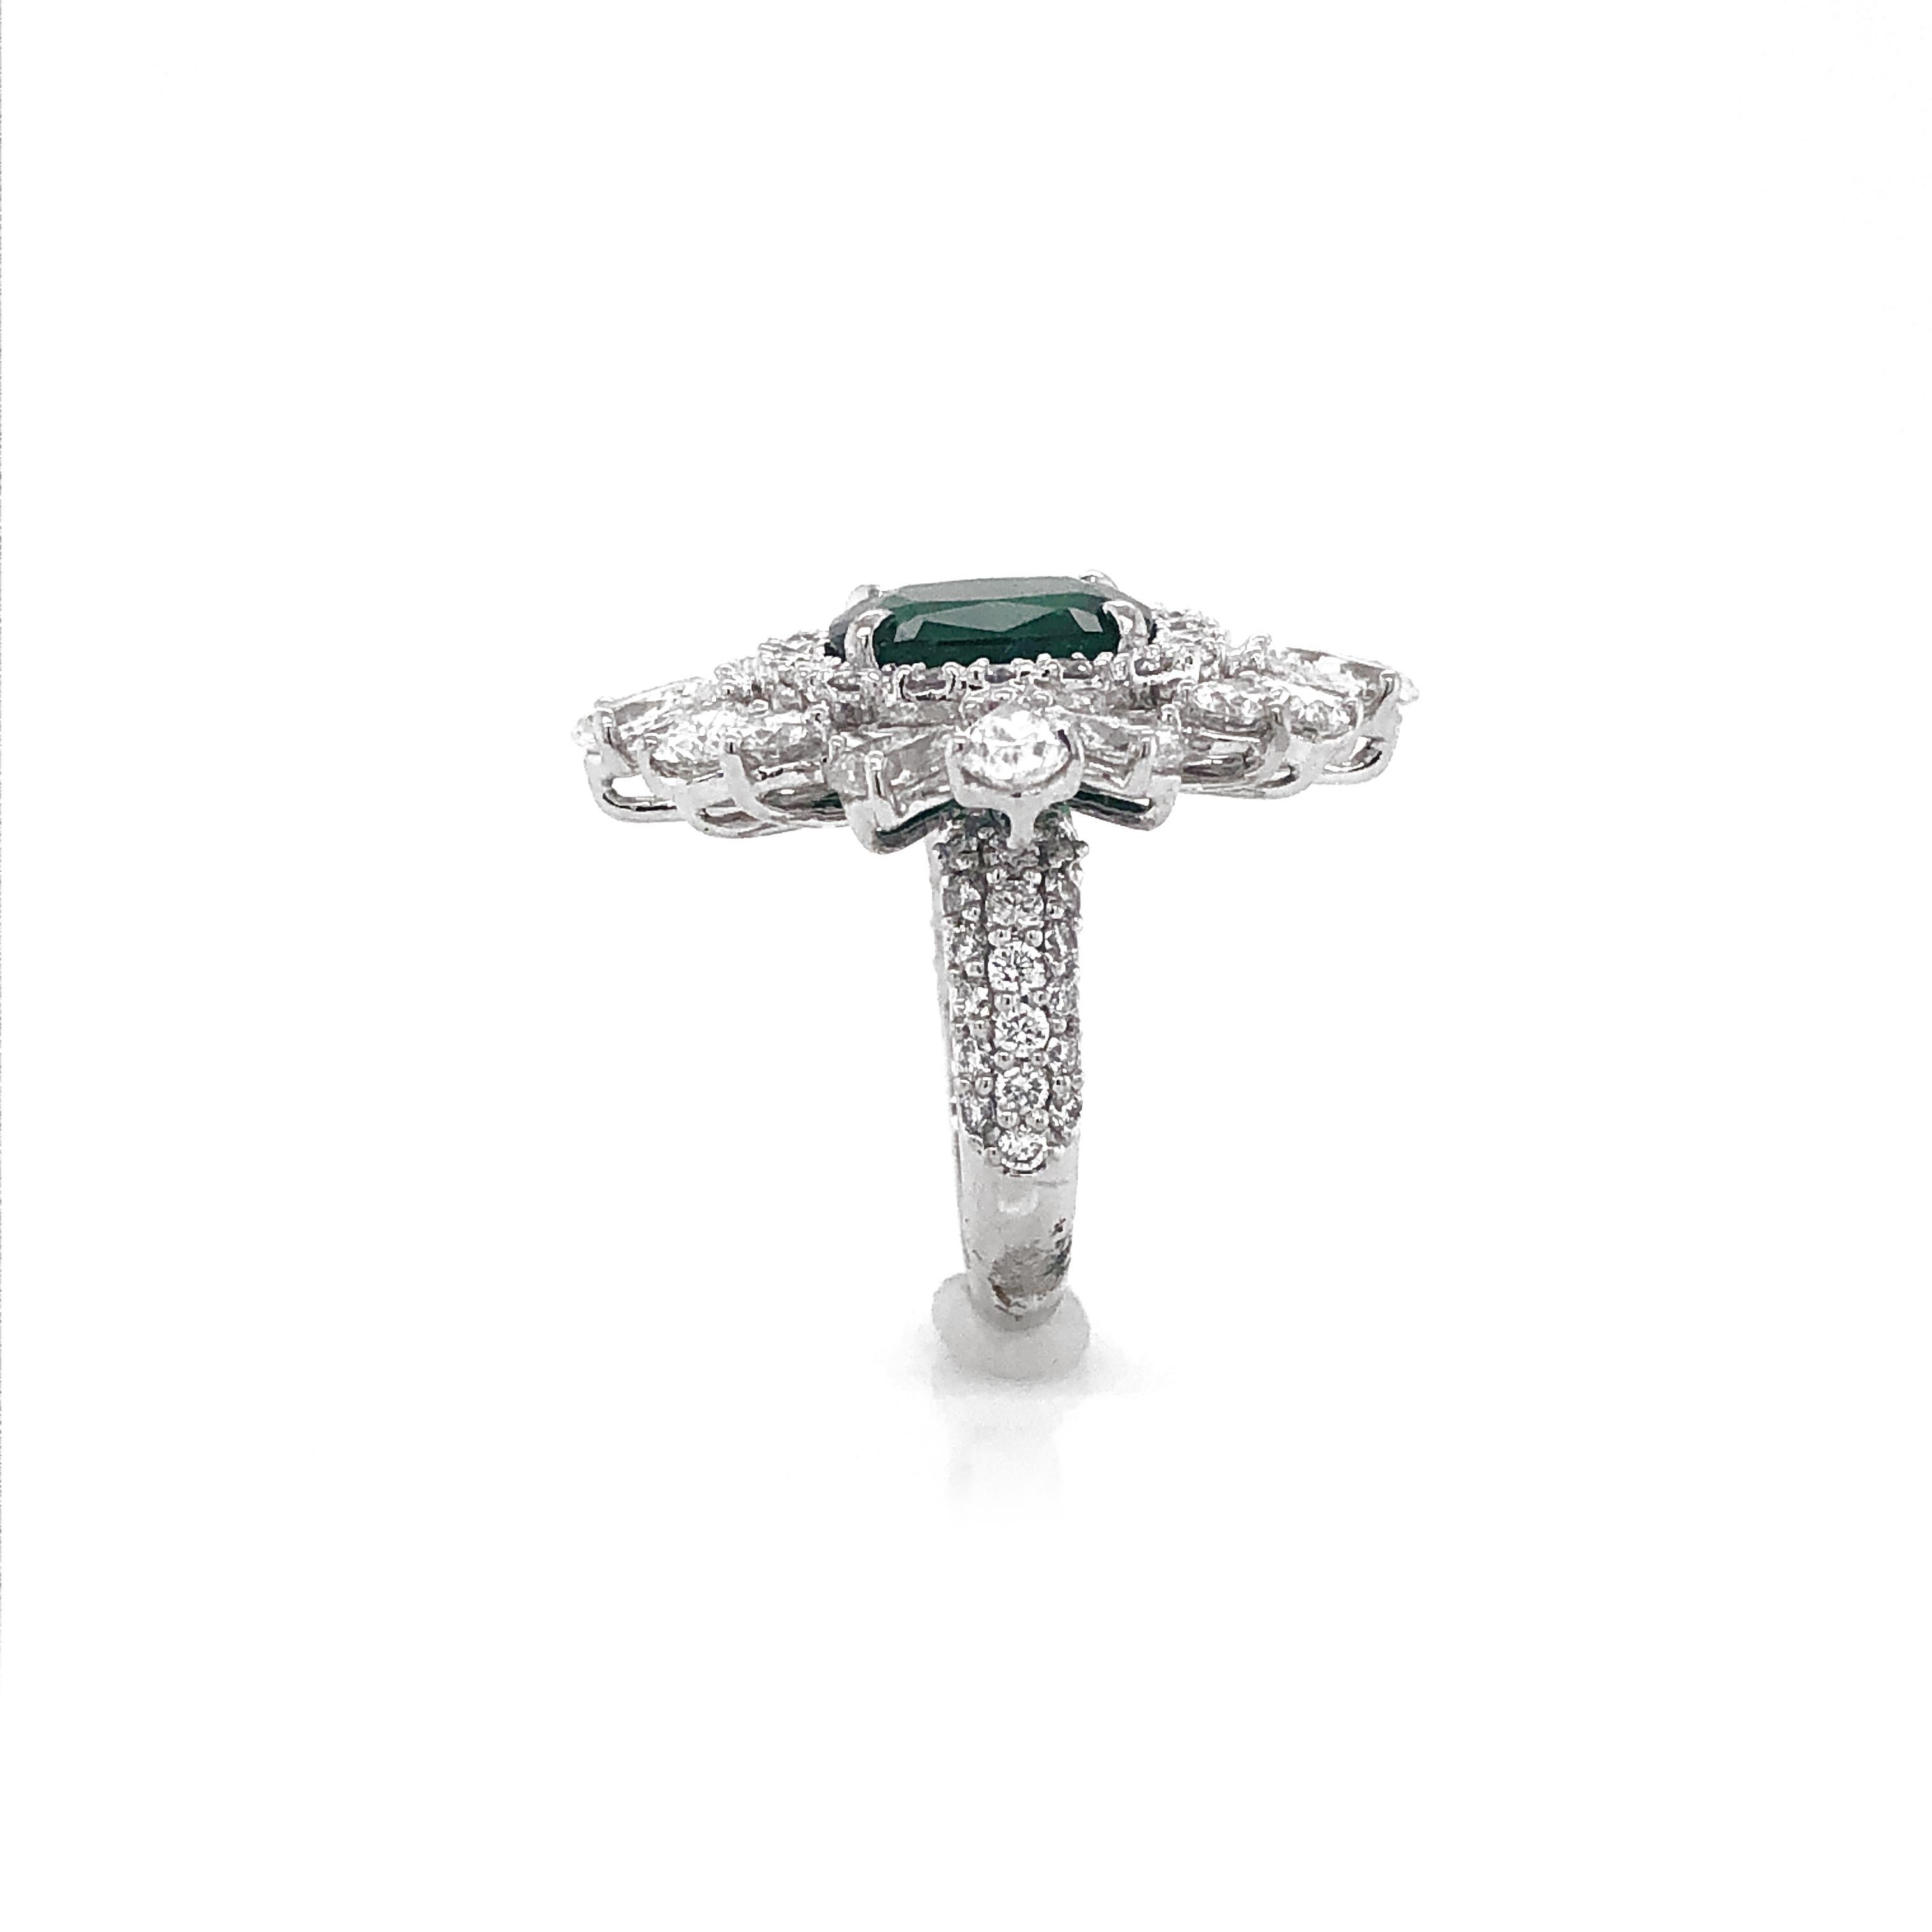 Certified Zambian Cushion Cut Emerald 4.65 Carat Diamond Platinum Cocktail Ring For Sale 5